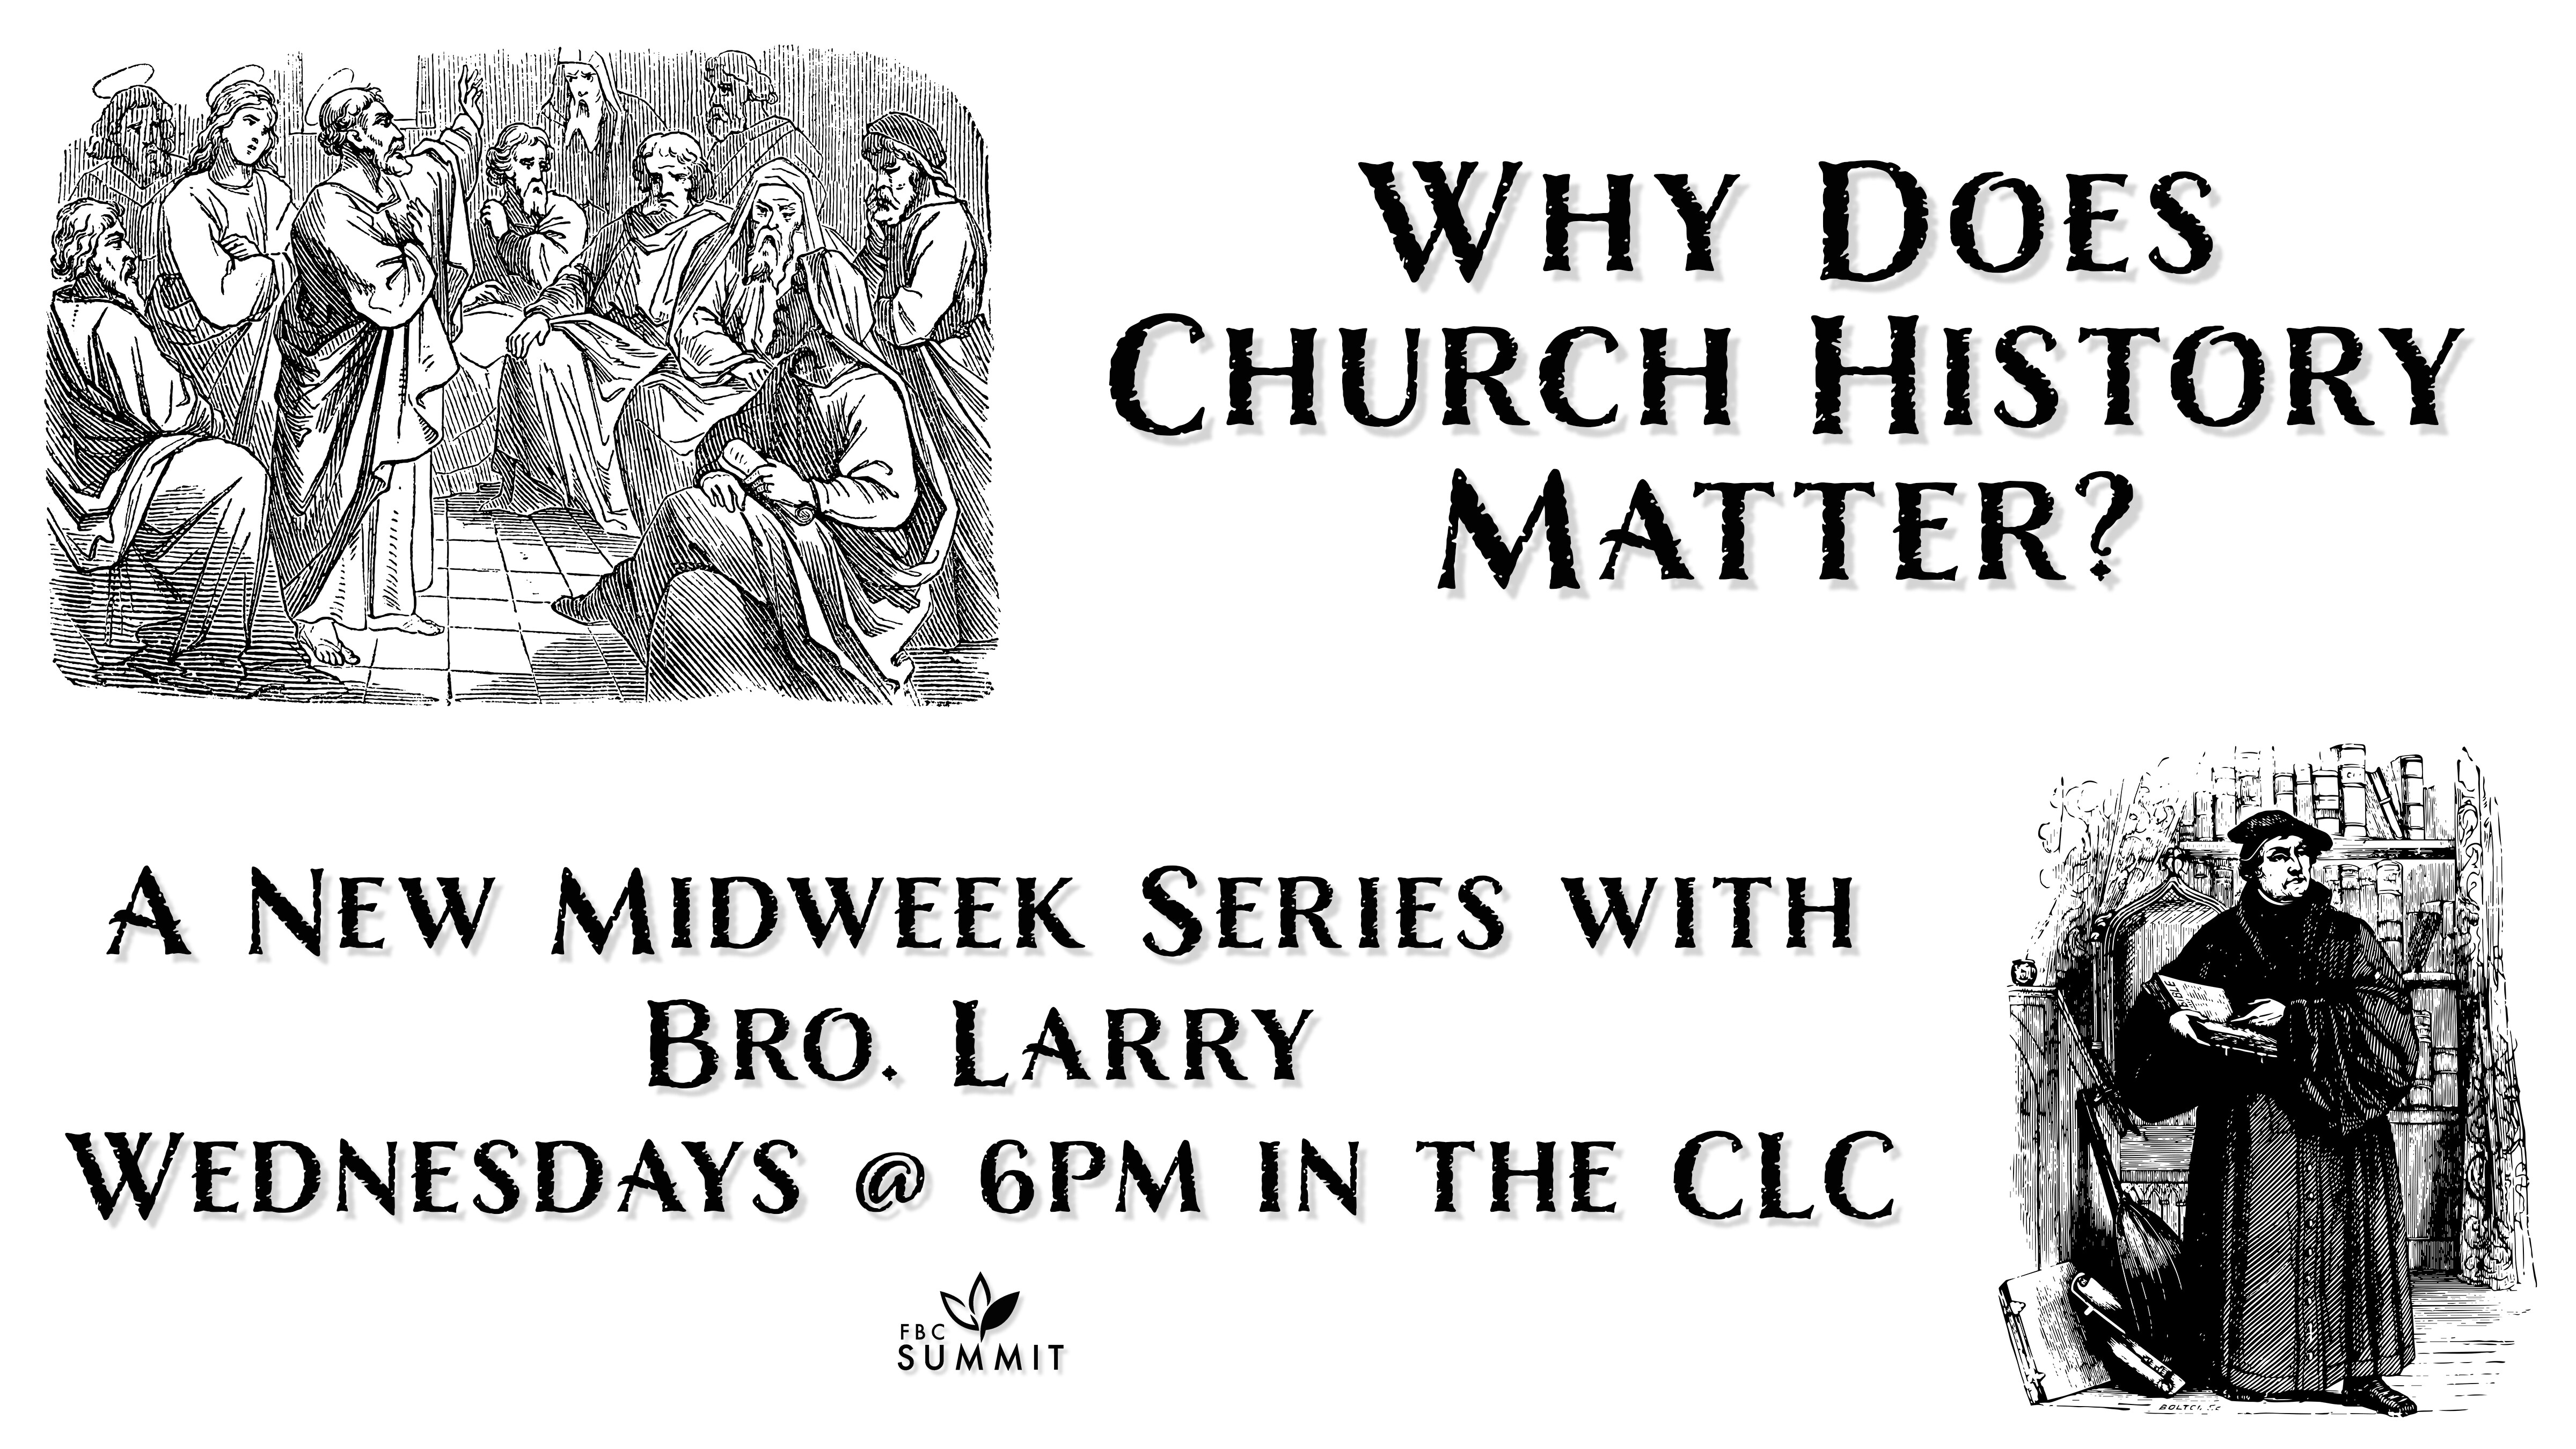 Midweek Bible Study: "Church History 101: The 11th & 12th Centuries" // Dr. Larry LeBlanc